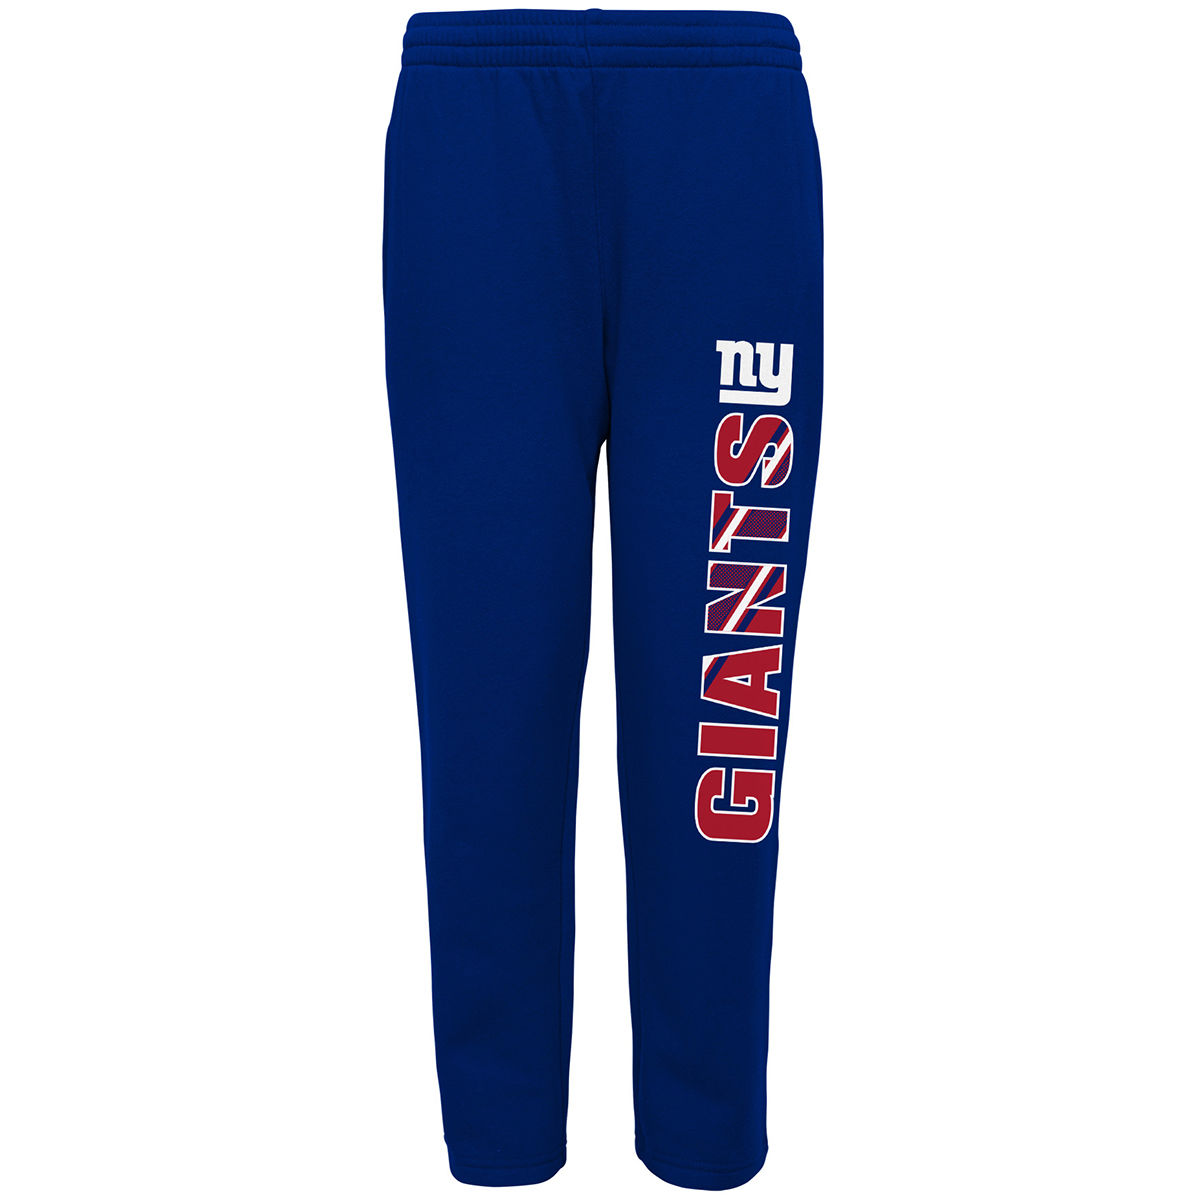 New York Giants Big Boys' Origin Fleece Pants - Blue, XL